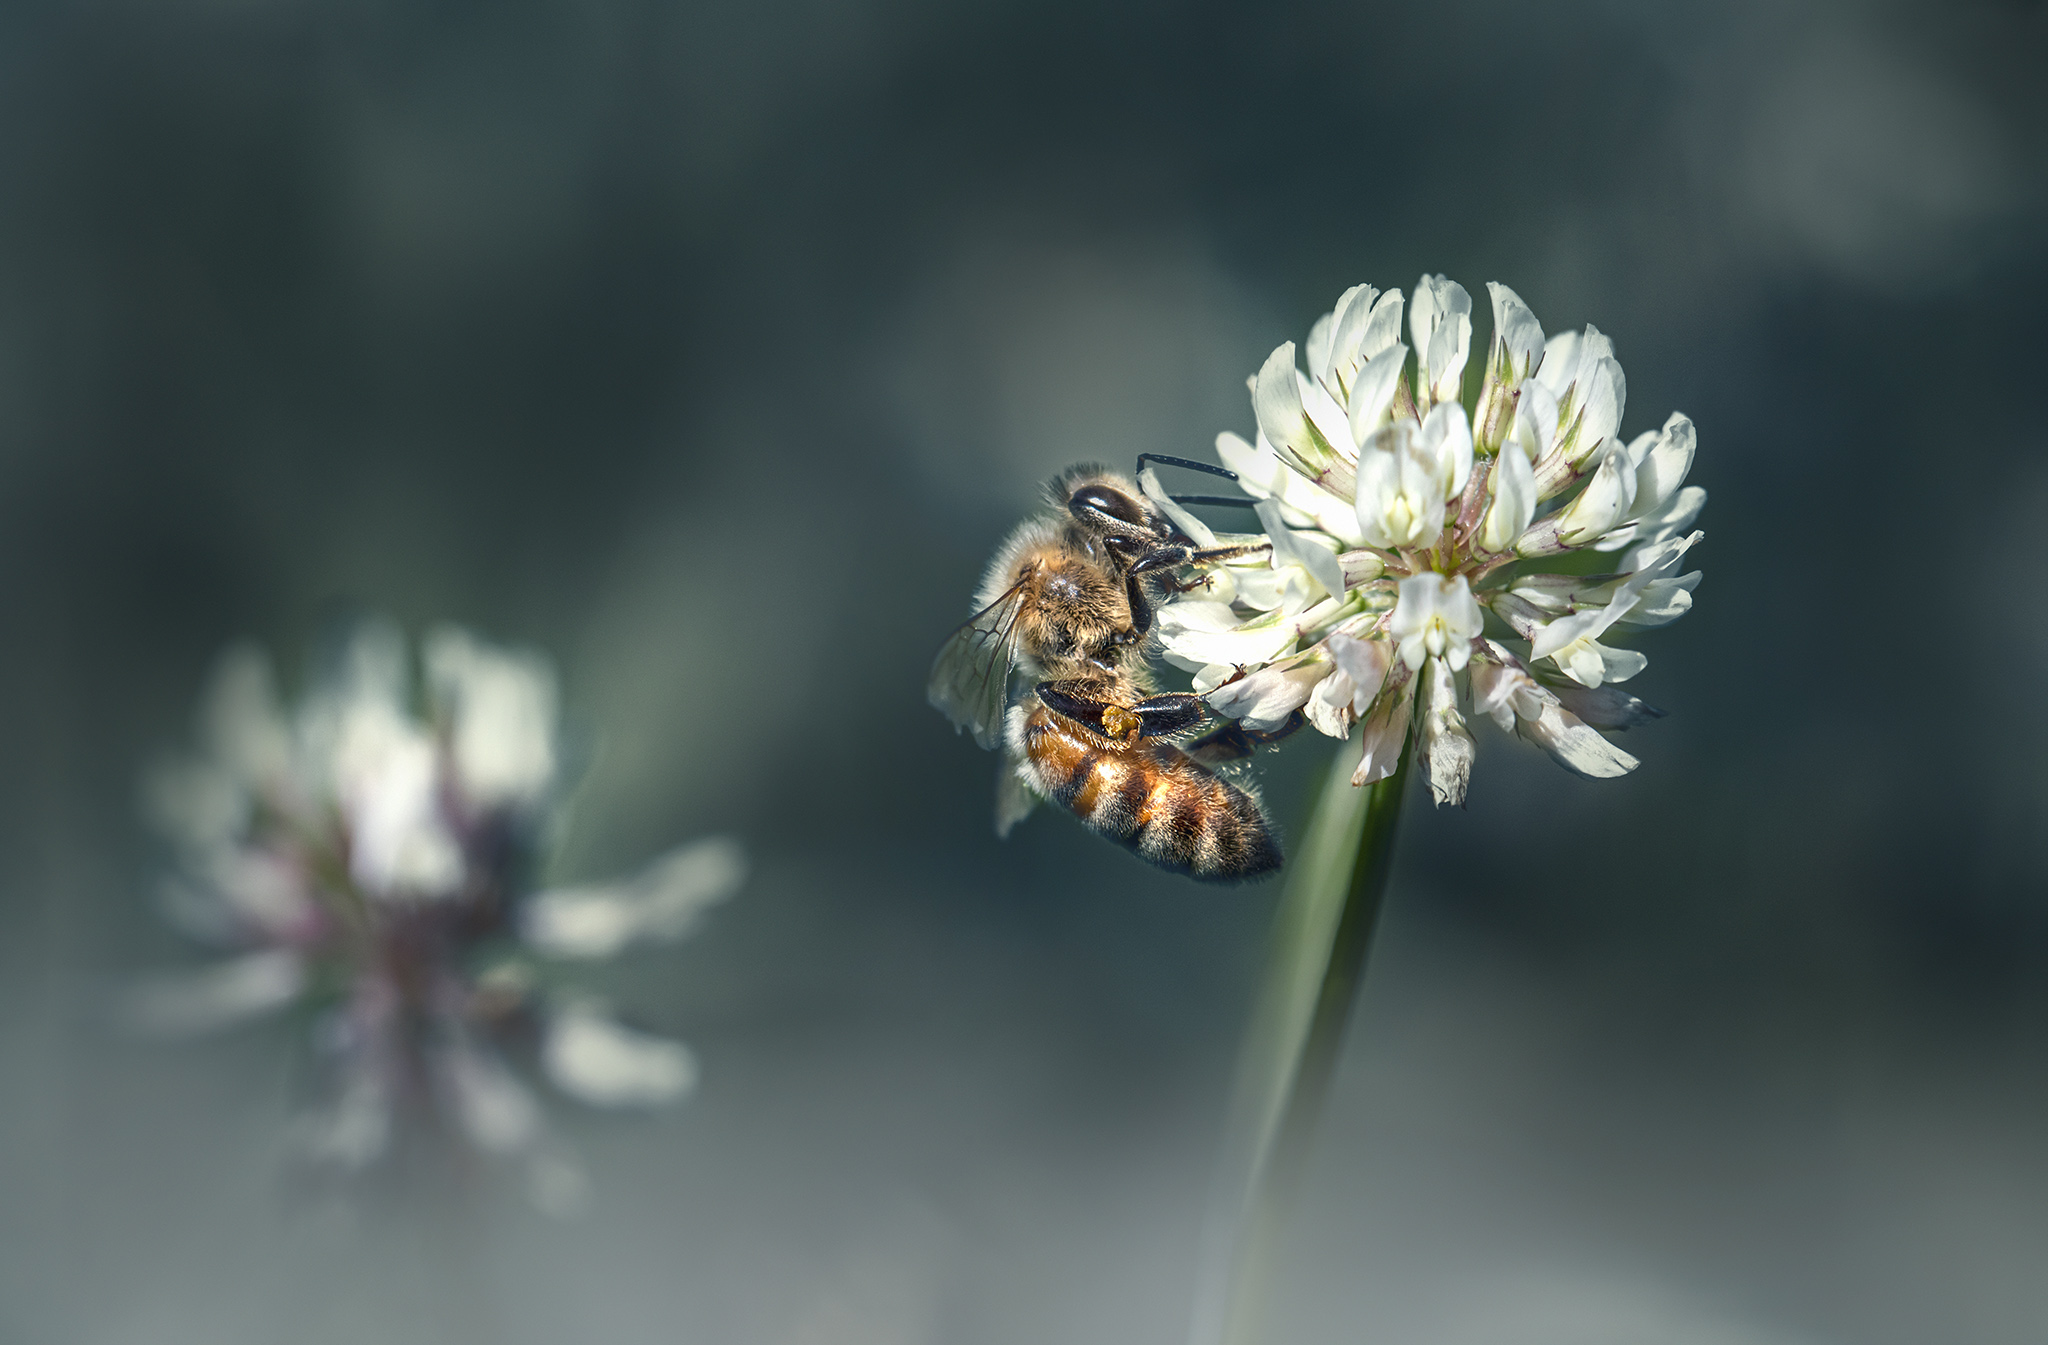 Western honey bee (Apis mellifera)